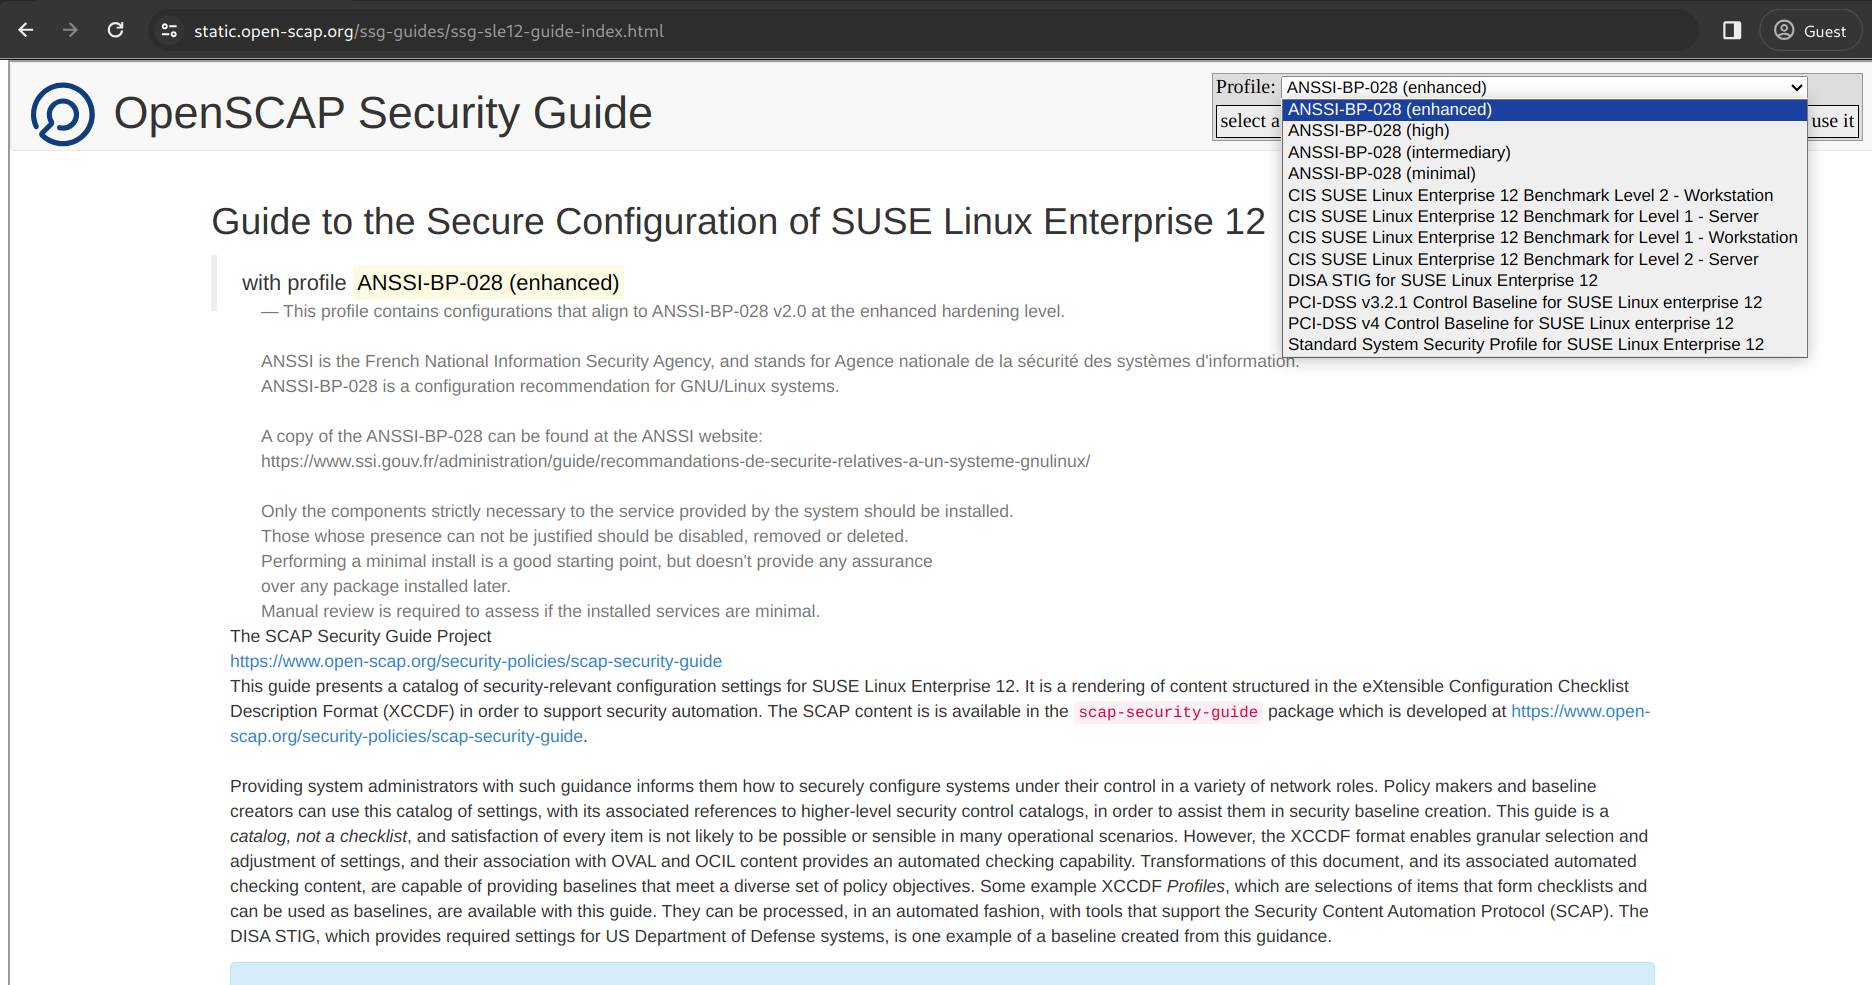 SCAP Security Guide profiles for SUSE Linux Enterprise 12